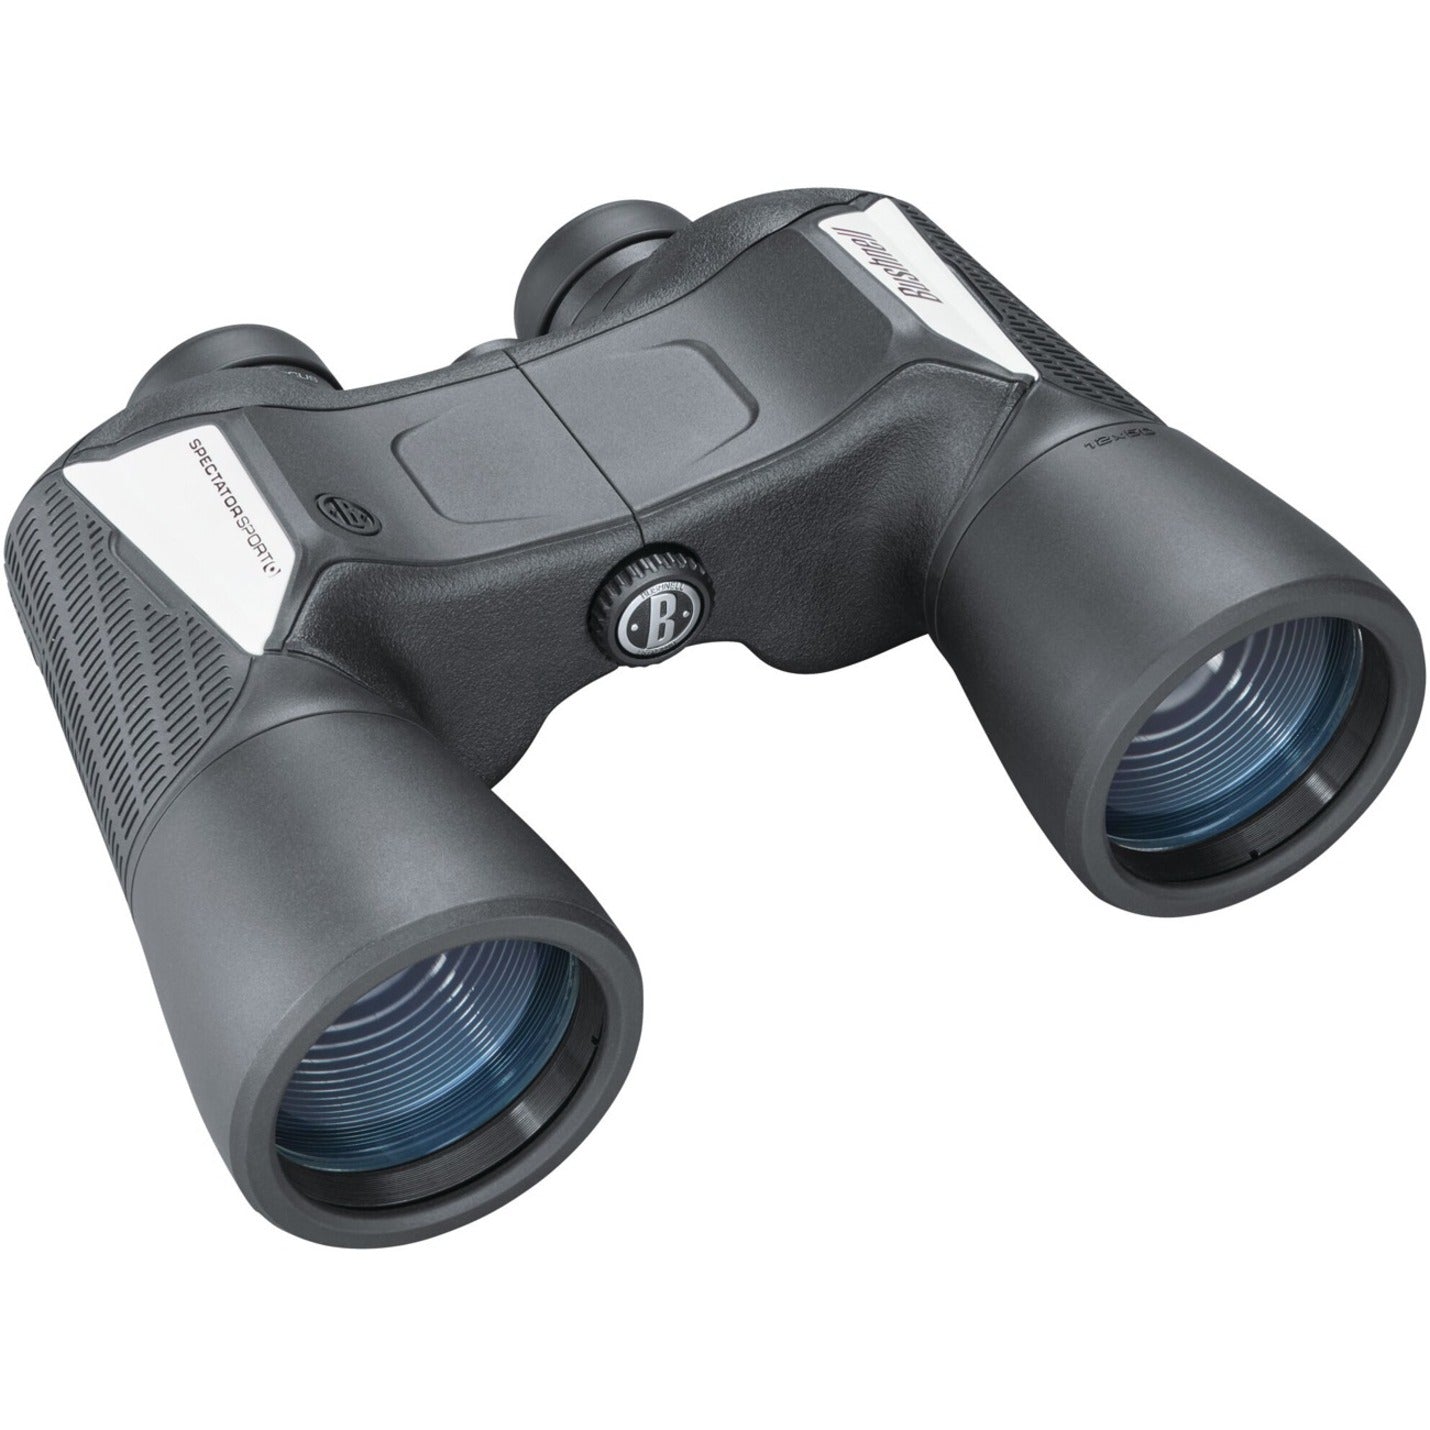 Bushnell BS11250 Spectator Sport Binoculars 12X50, Night Vision, Water Resistant, Fog Proof